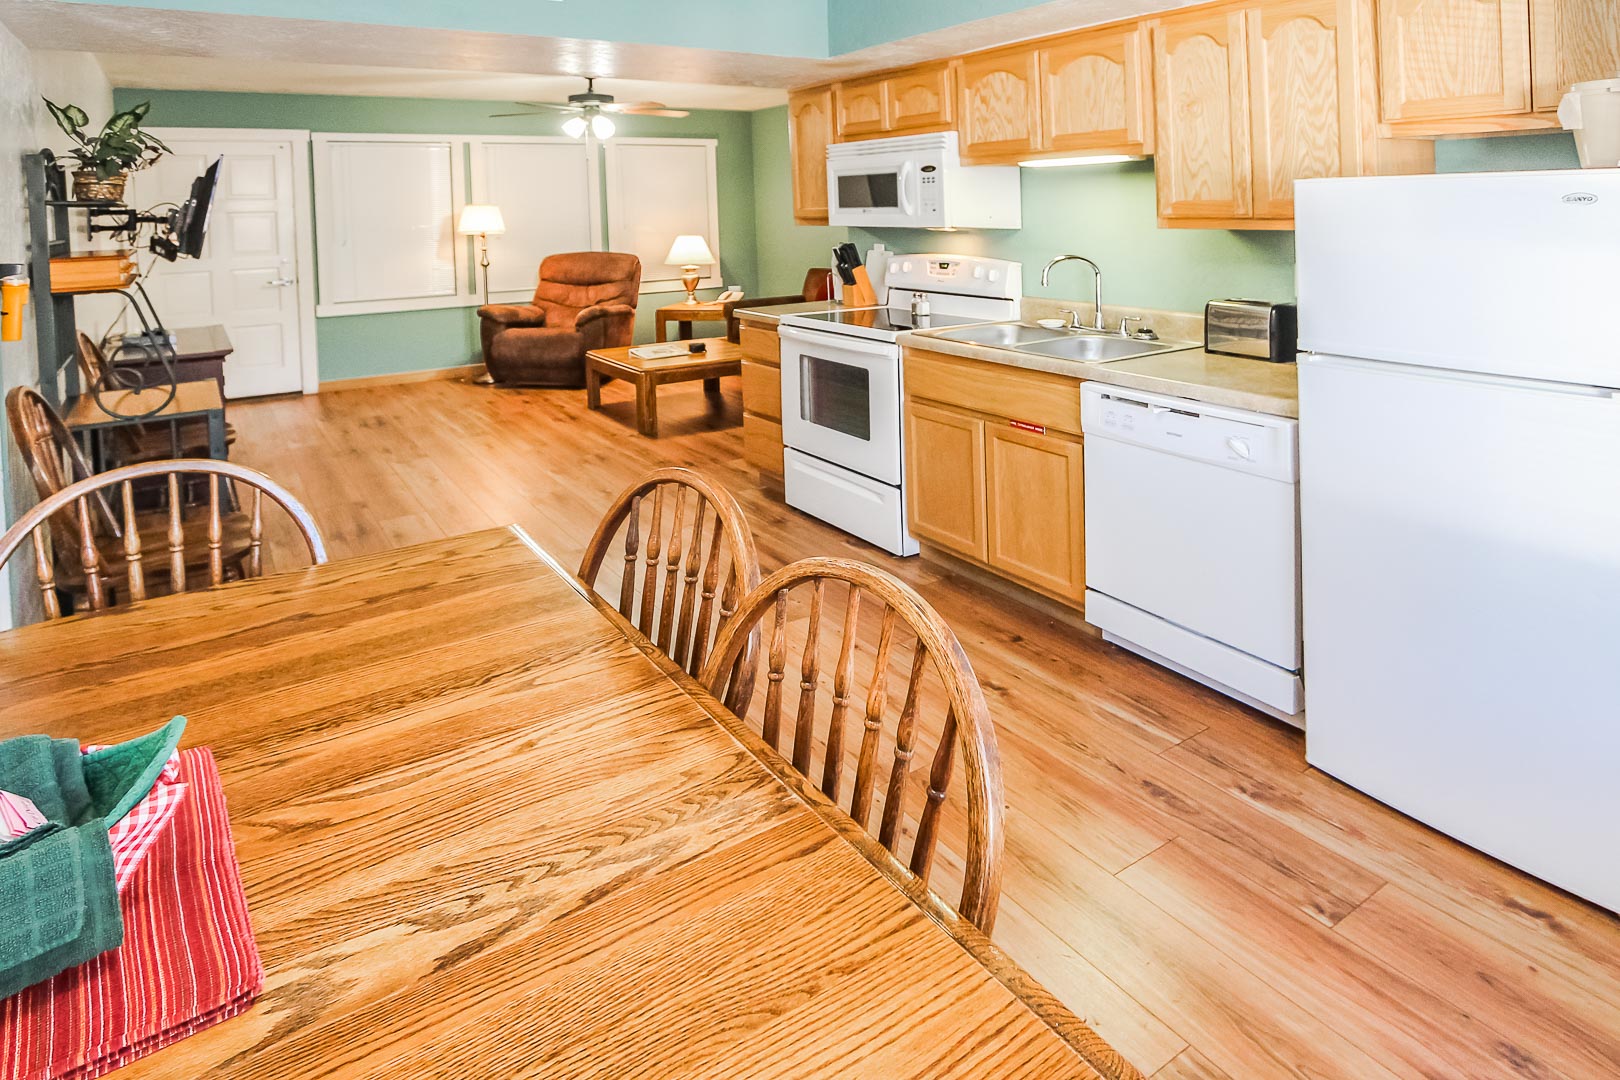 A spacious kitchen at VRI's Roundhouse Resort in Pinetop, Arizona.